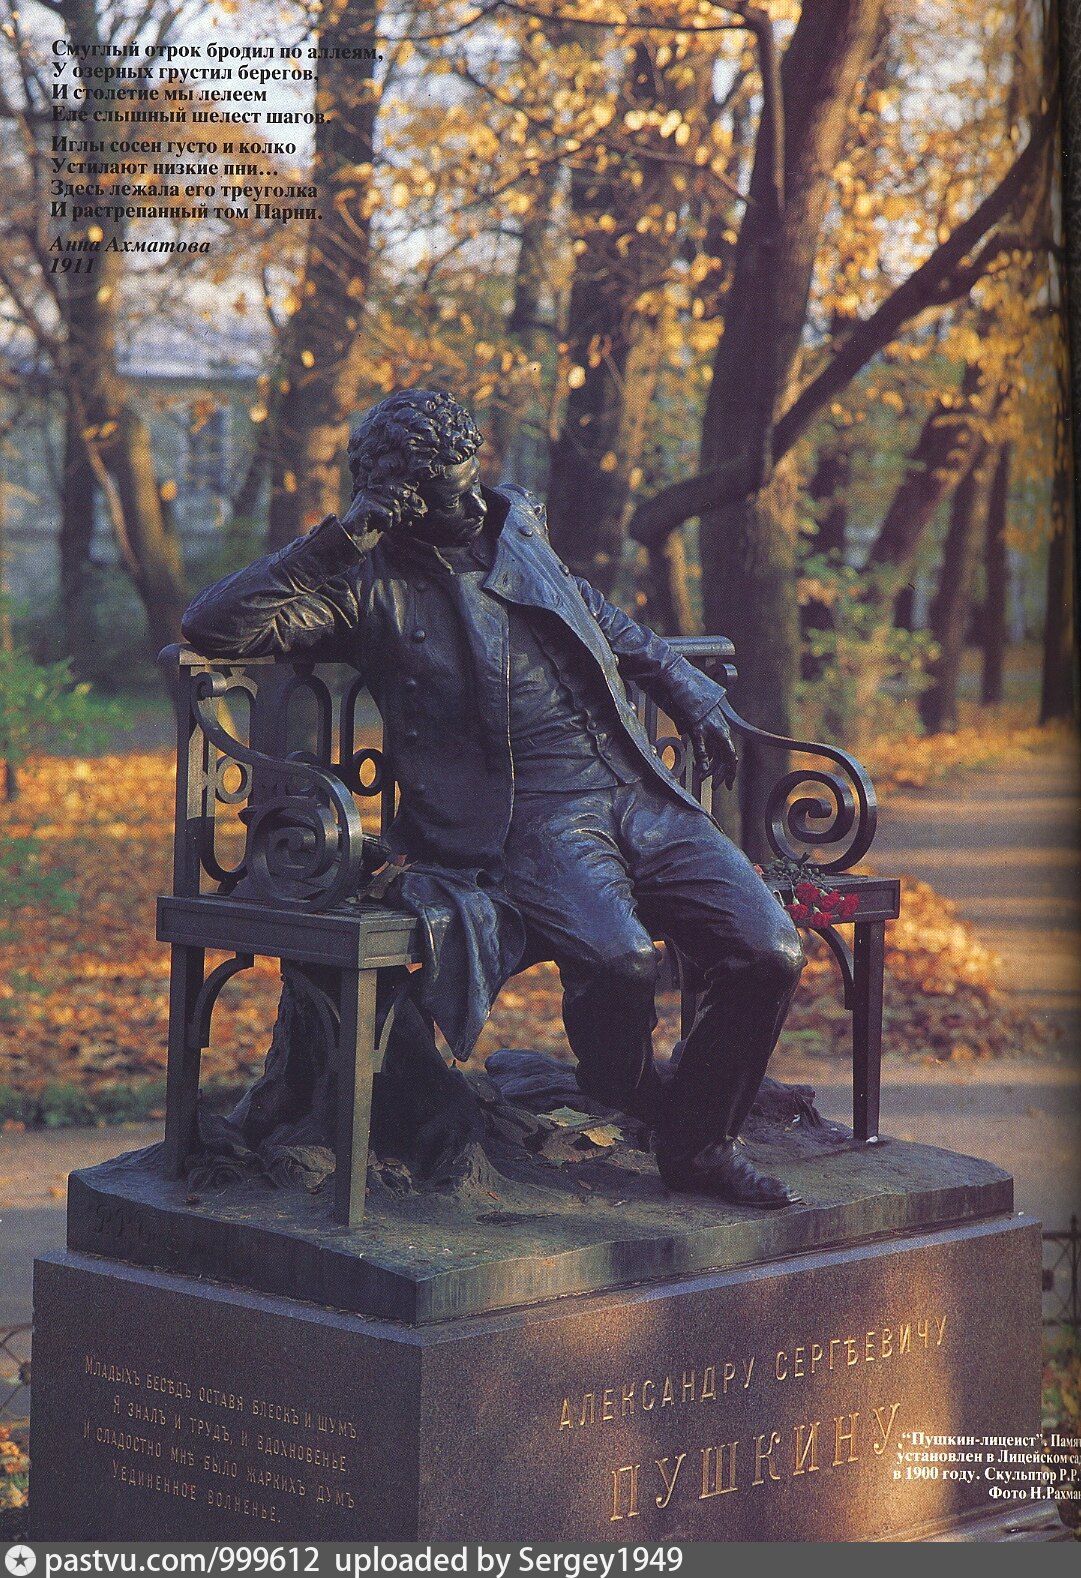 Роберт Бах памятник Пушкину